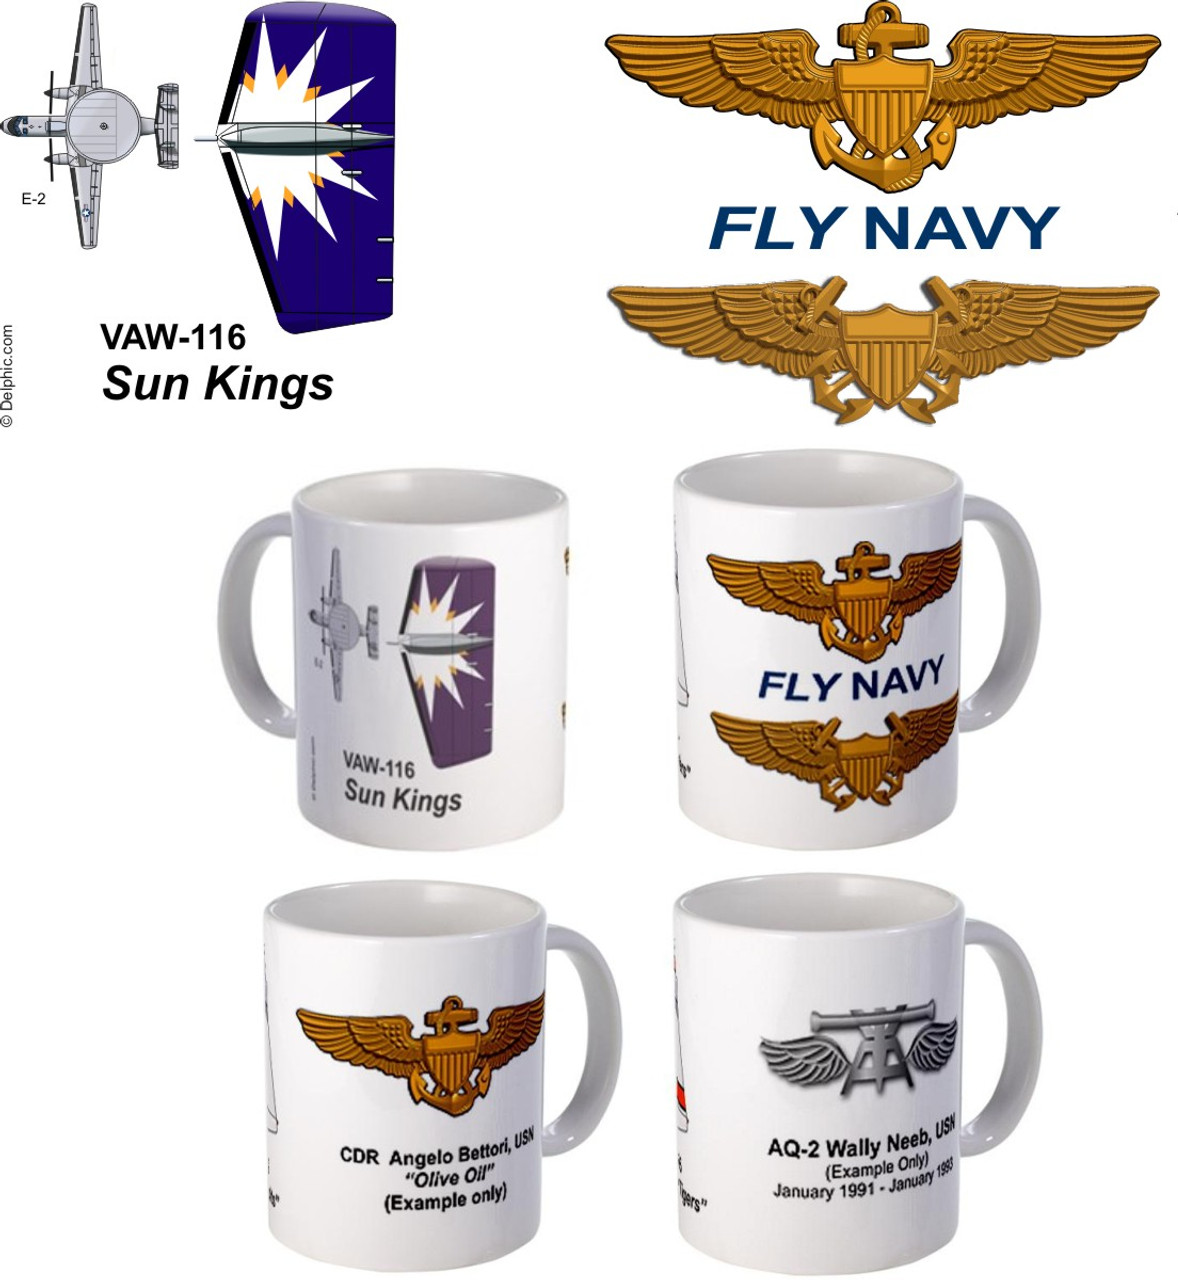 VAW-116 "Sun Kings" E-2 Hawkeye mug